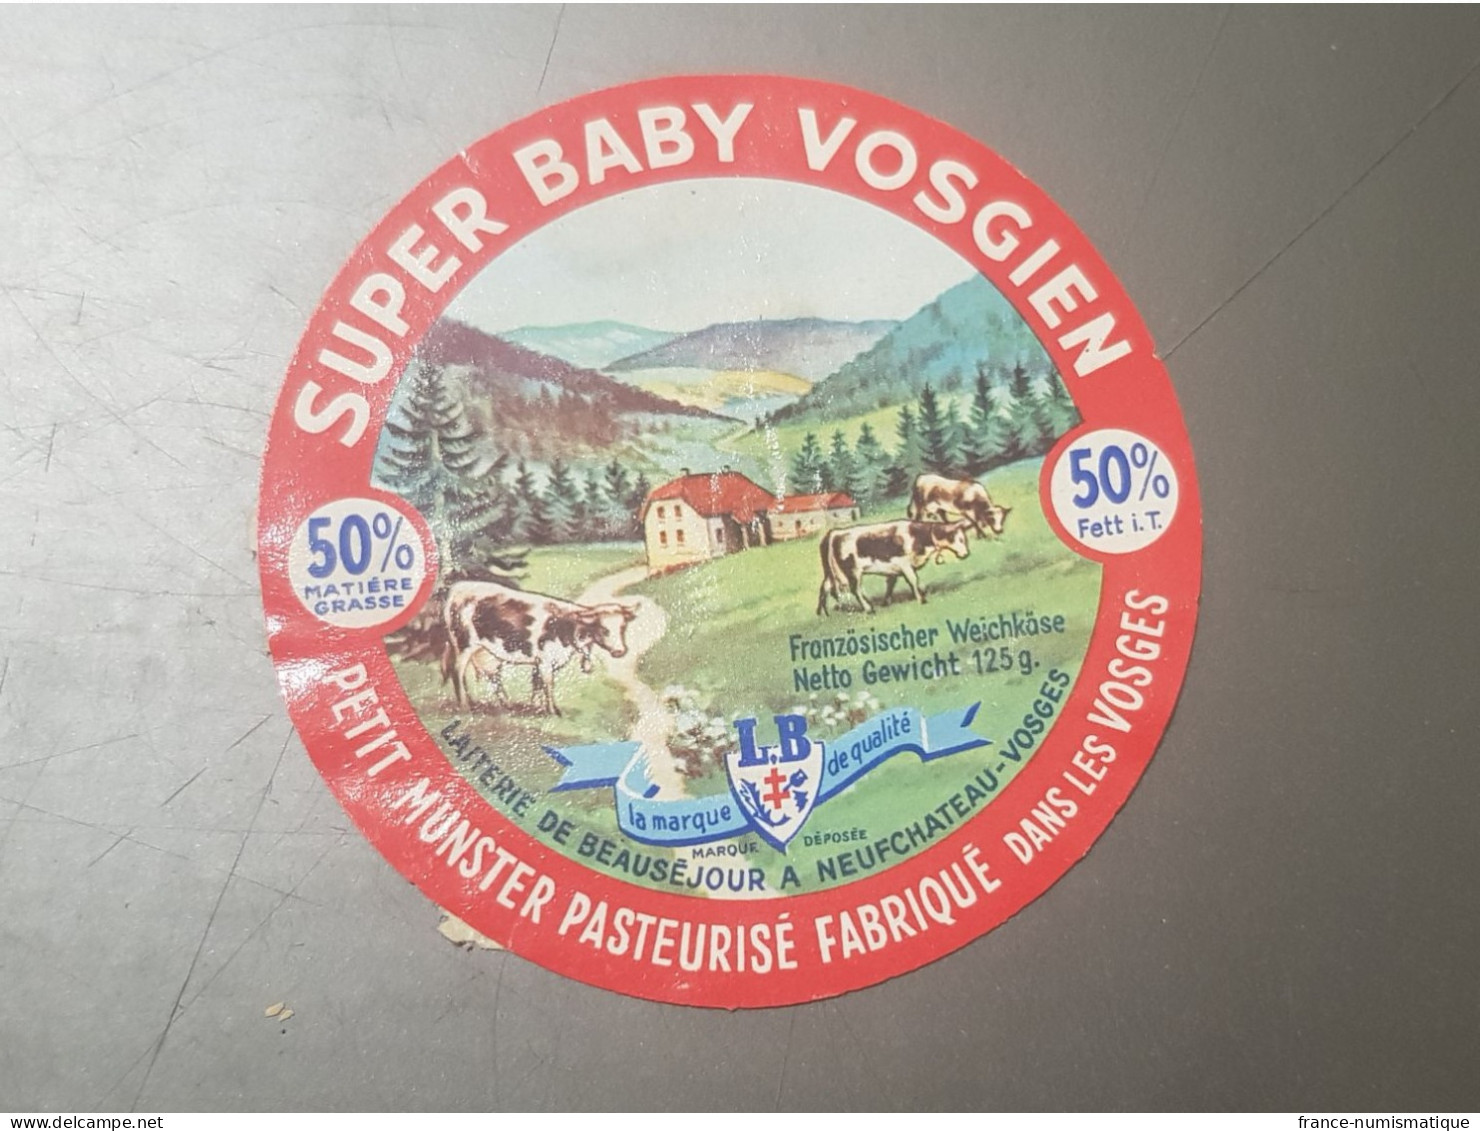 Etiquette De Petit Camembert: SUPER BABY VOSGIEN - Fromage